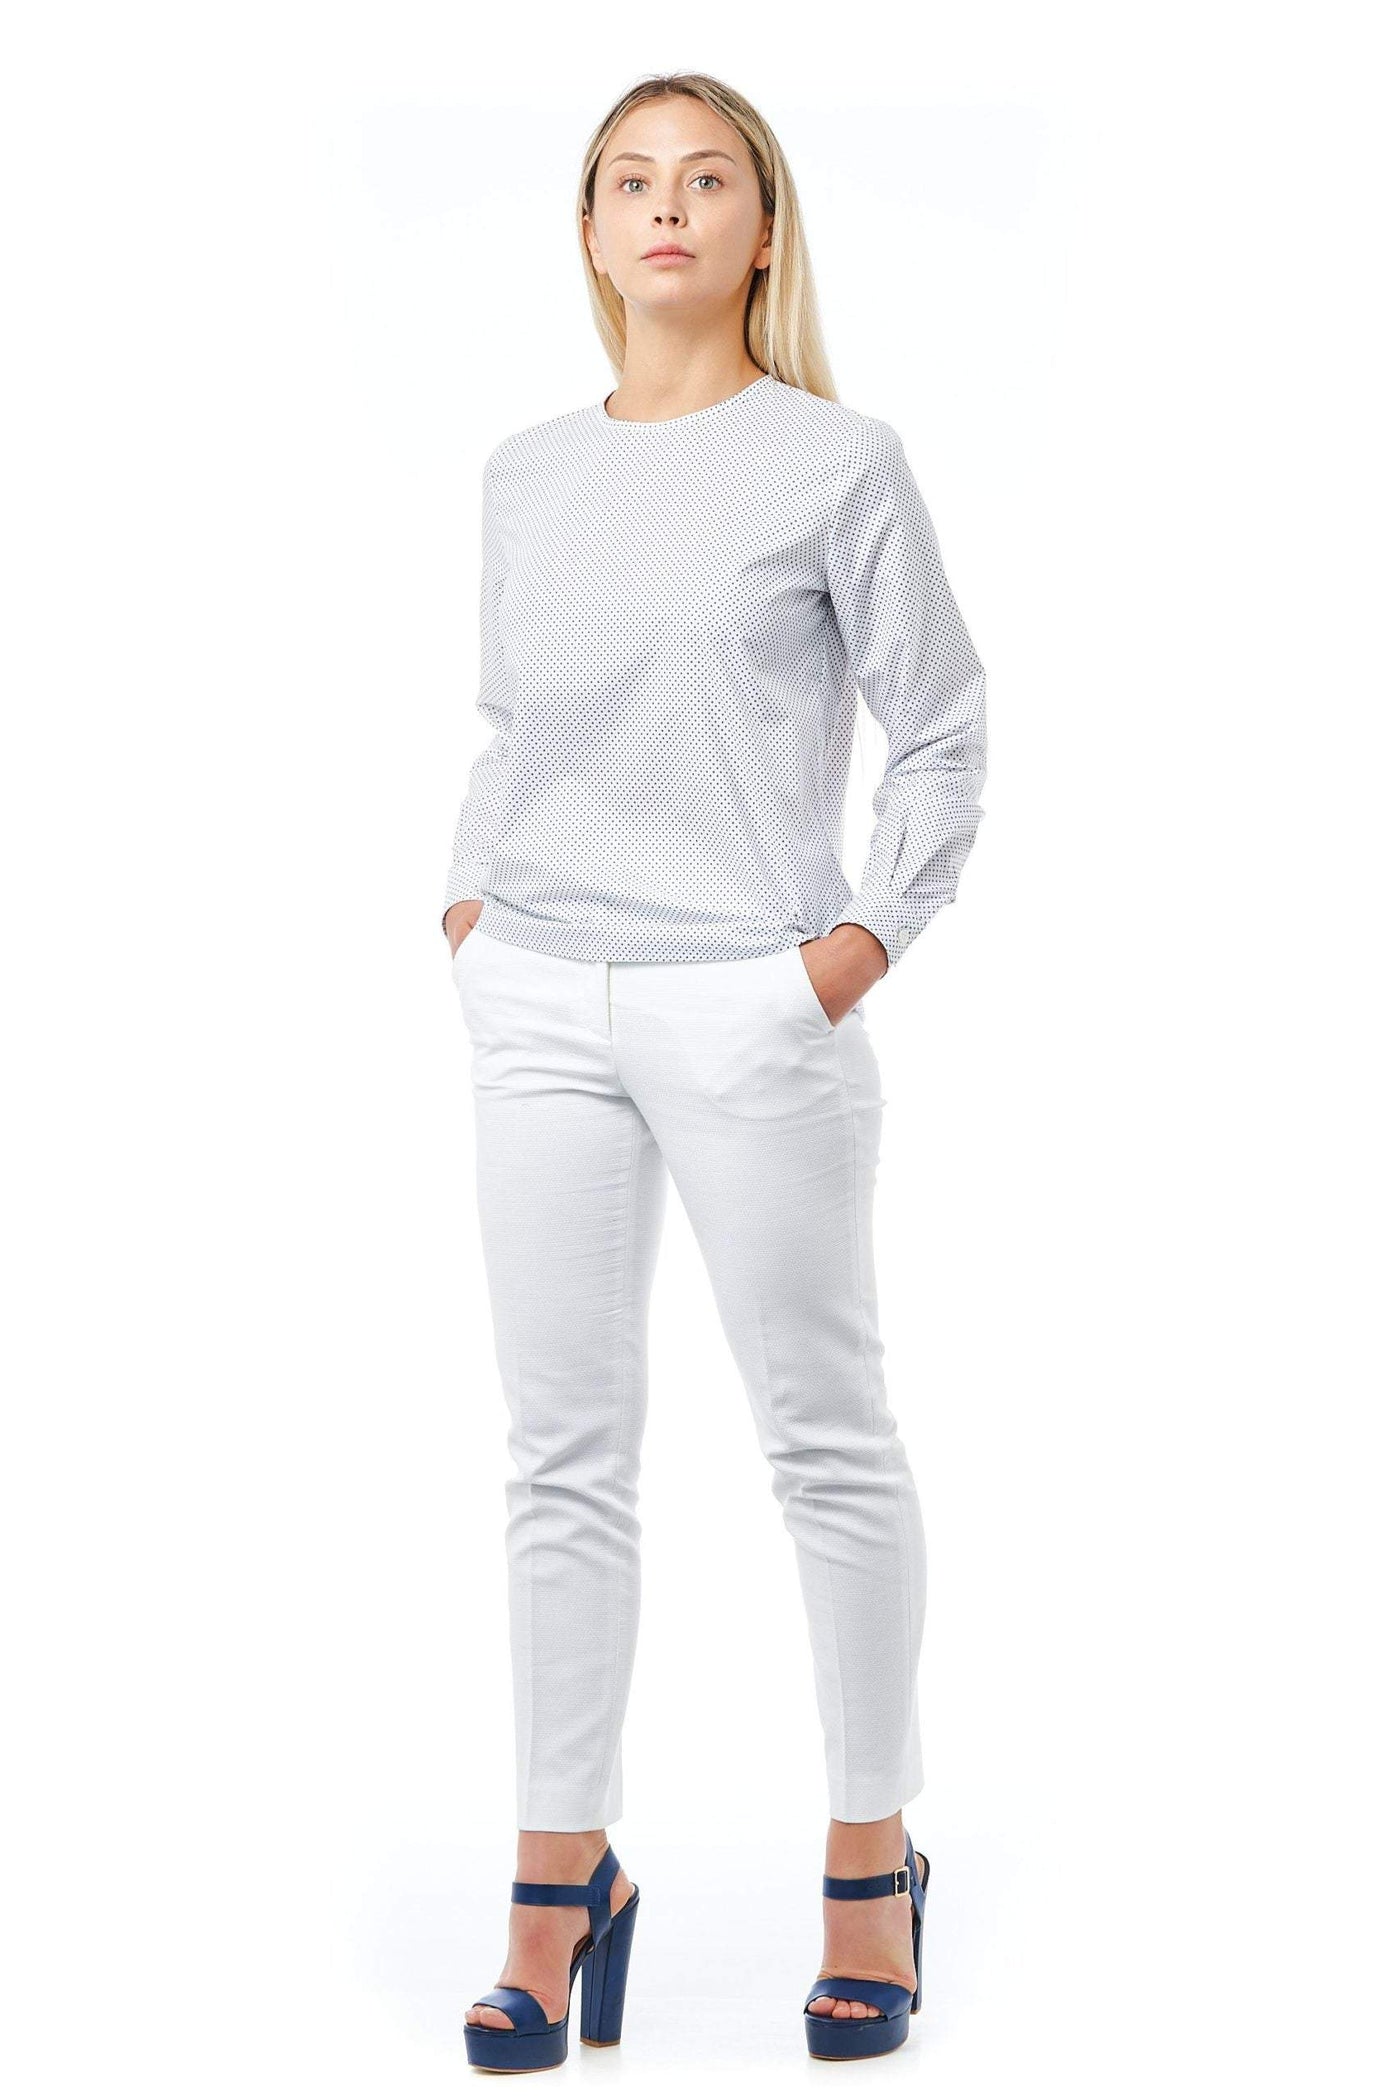 Bagutta White Cotton Shirt Bagutta, feed-1, L, M, Shirts - Women - Clothing, White at SEYMAYKA